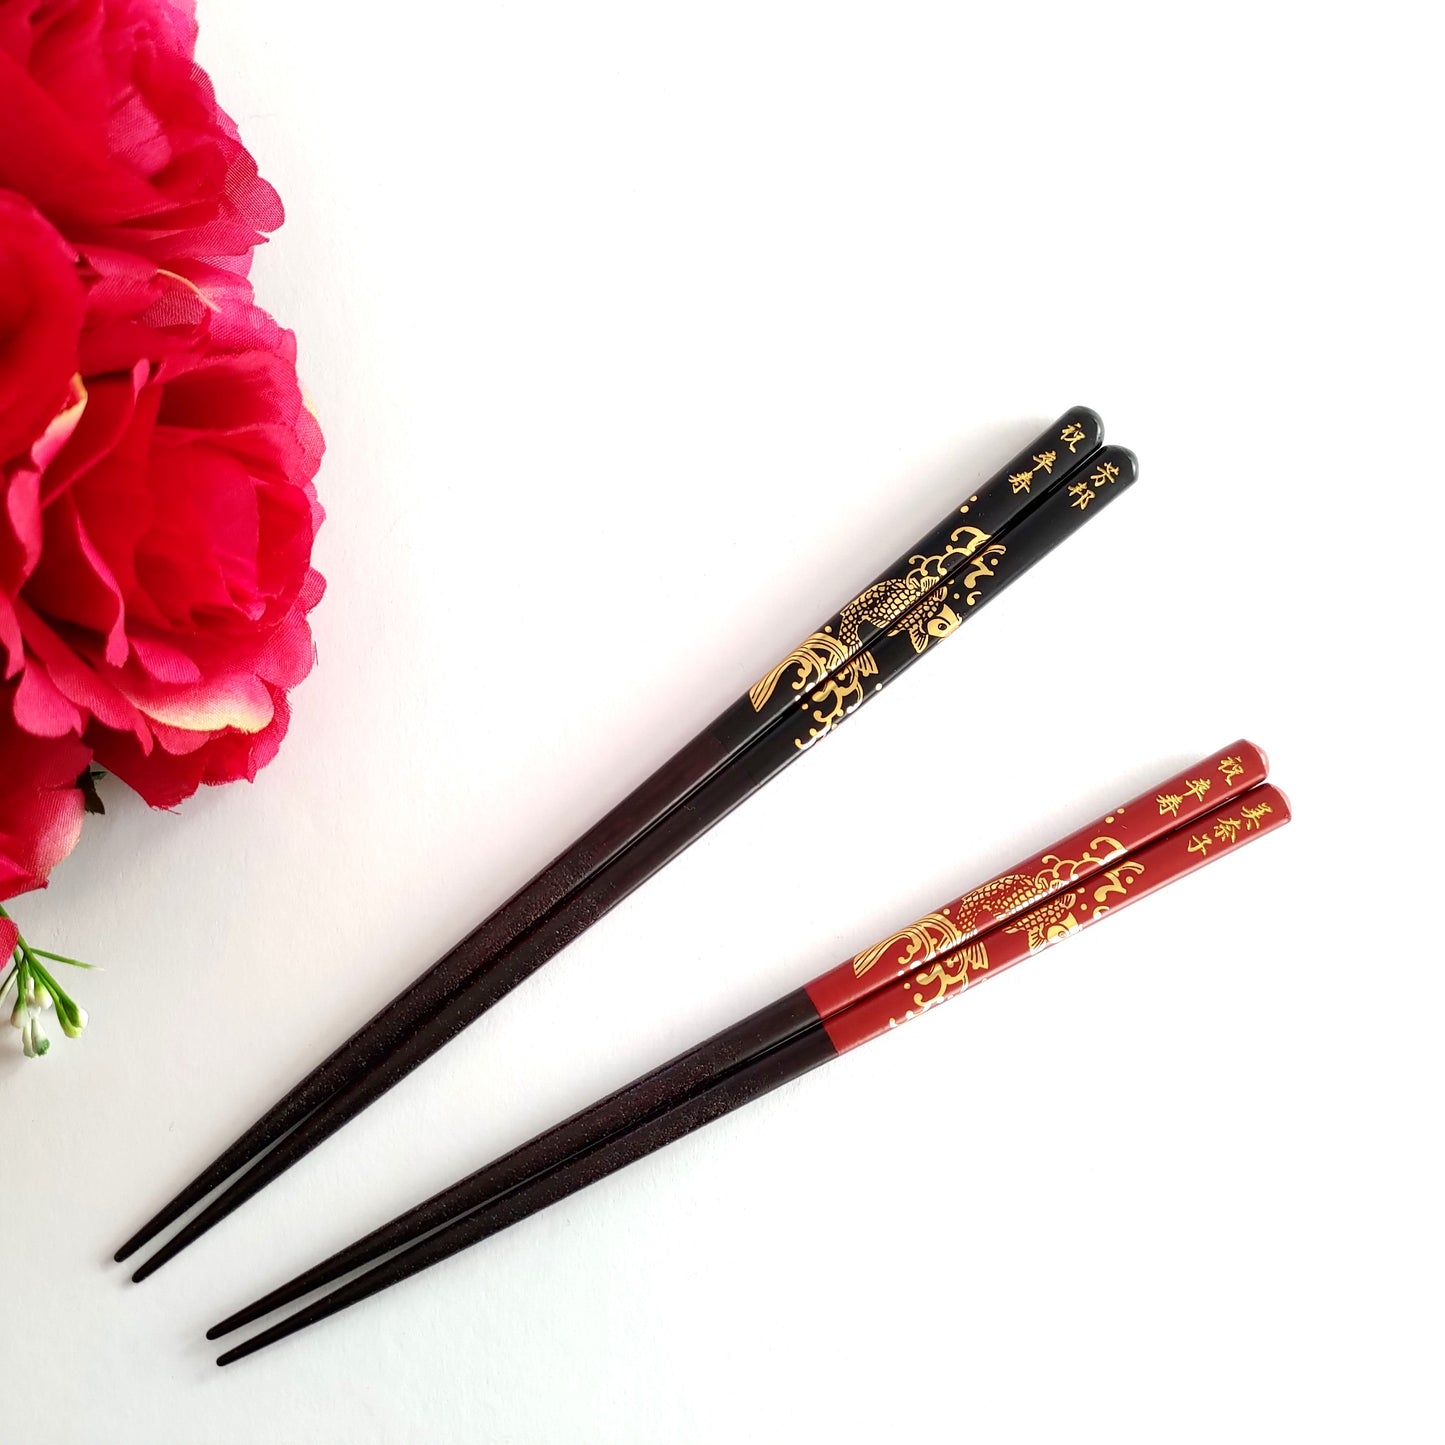 Golden legendary carp Japanese chopsticks black red - SINGLE PAIR WITH ENGRAVED WOODEN BOX SET